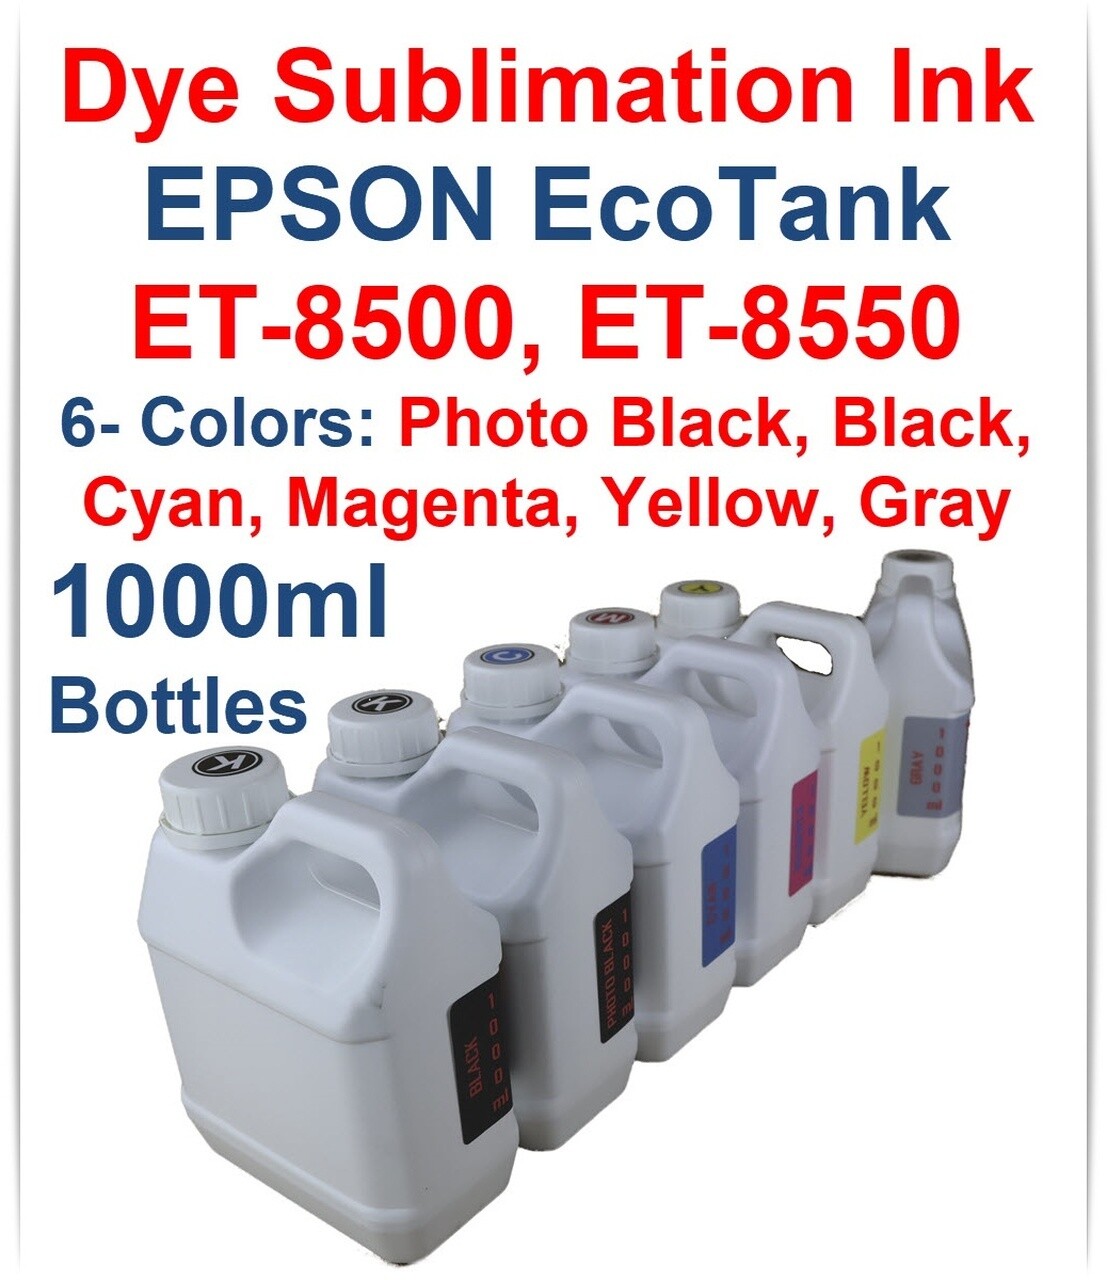 Dye Sublimation Ink 6- 1000ml bottles for EPSON EcoTank ET-8500 ET-8550 printers